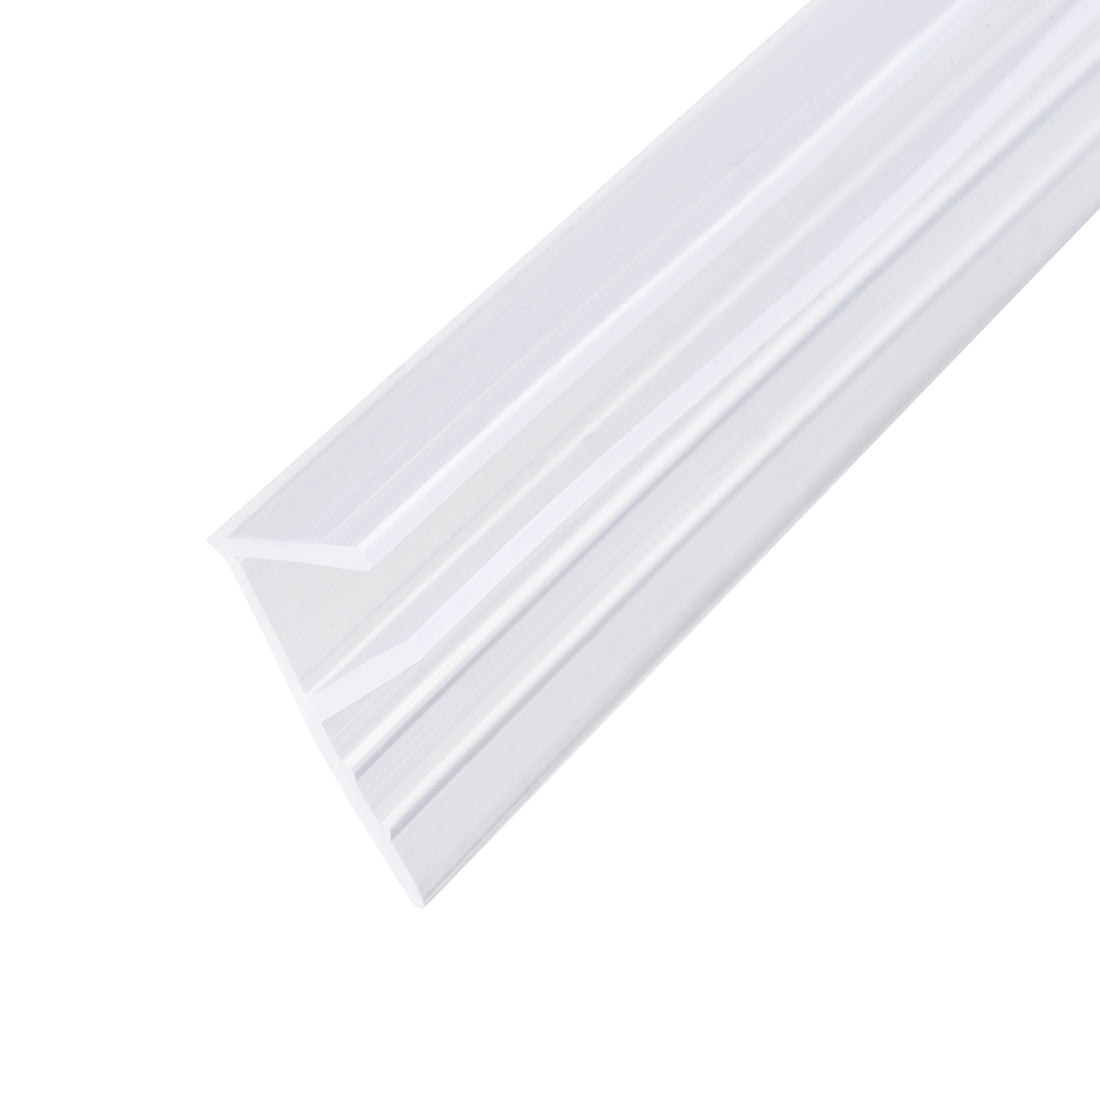 Uxcell Uxcell Frameless Glass Shower Door Sweep - Door Bottom Side Seal Strip F-Type with 3/4"(20mm) Drip Rail - 1/2"(12mm) Glass x 78.74"(2000mm) Length